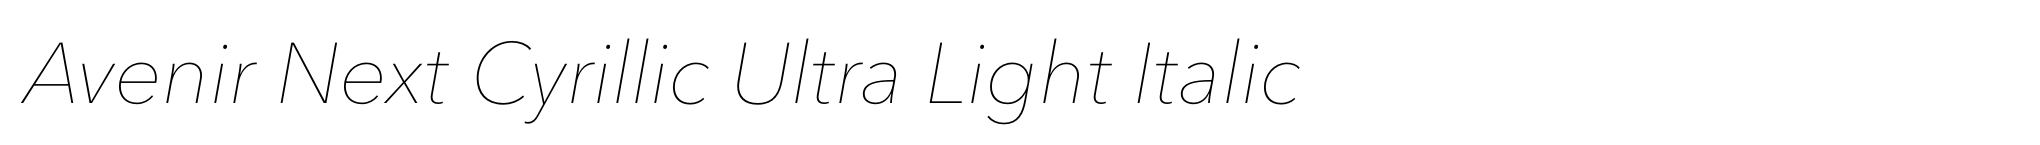 Avenir Next Cyrillic Ultra Light Italic image